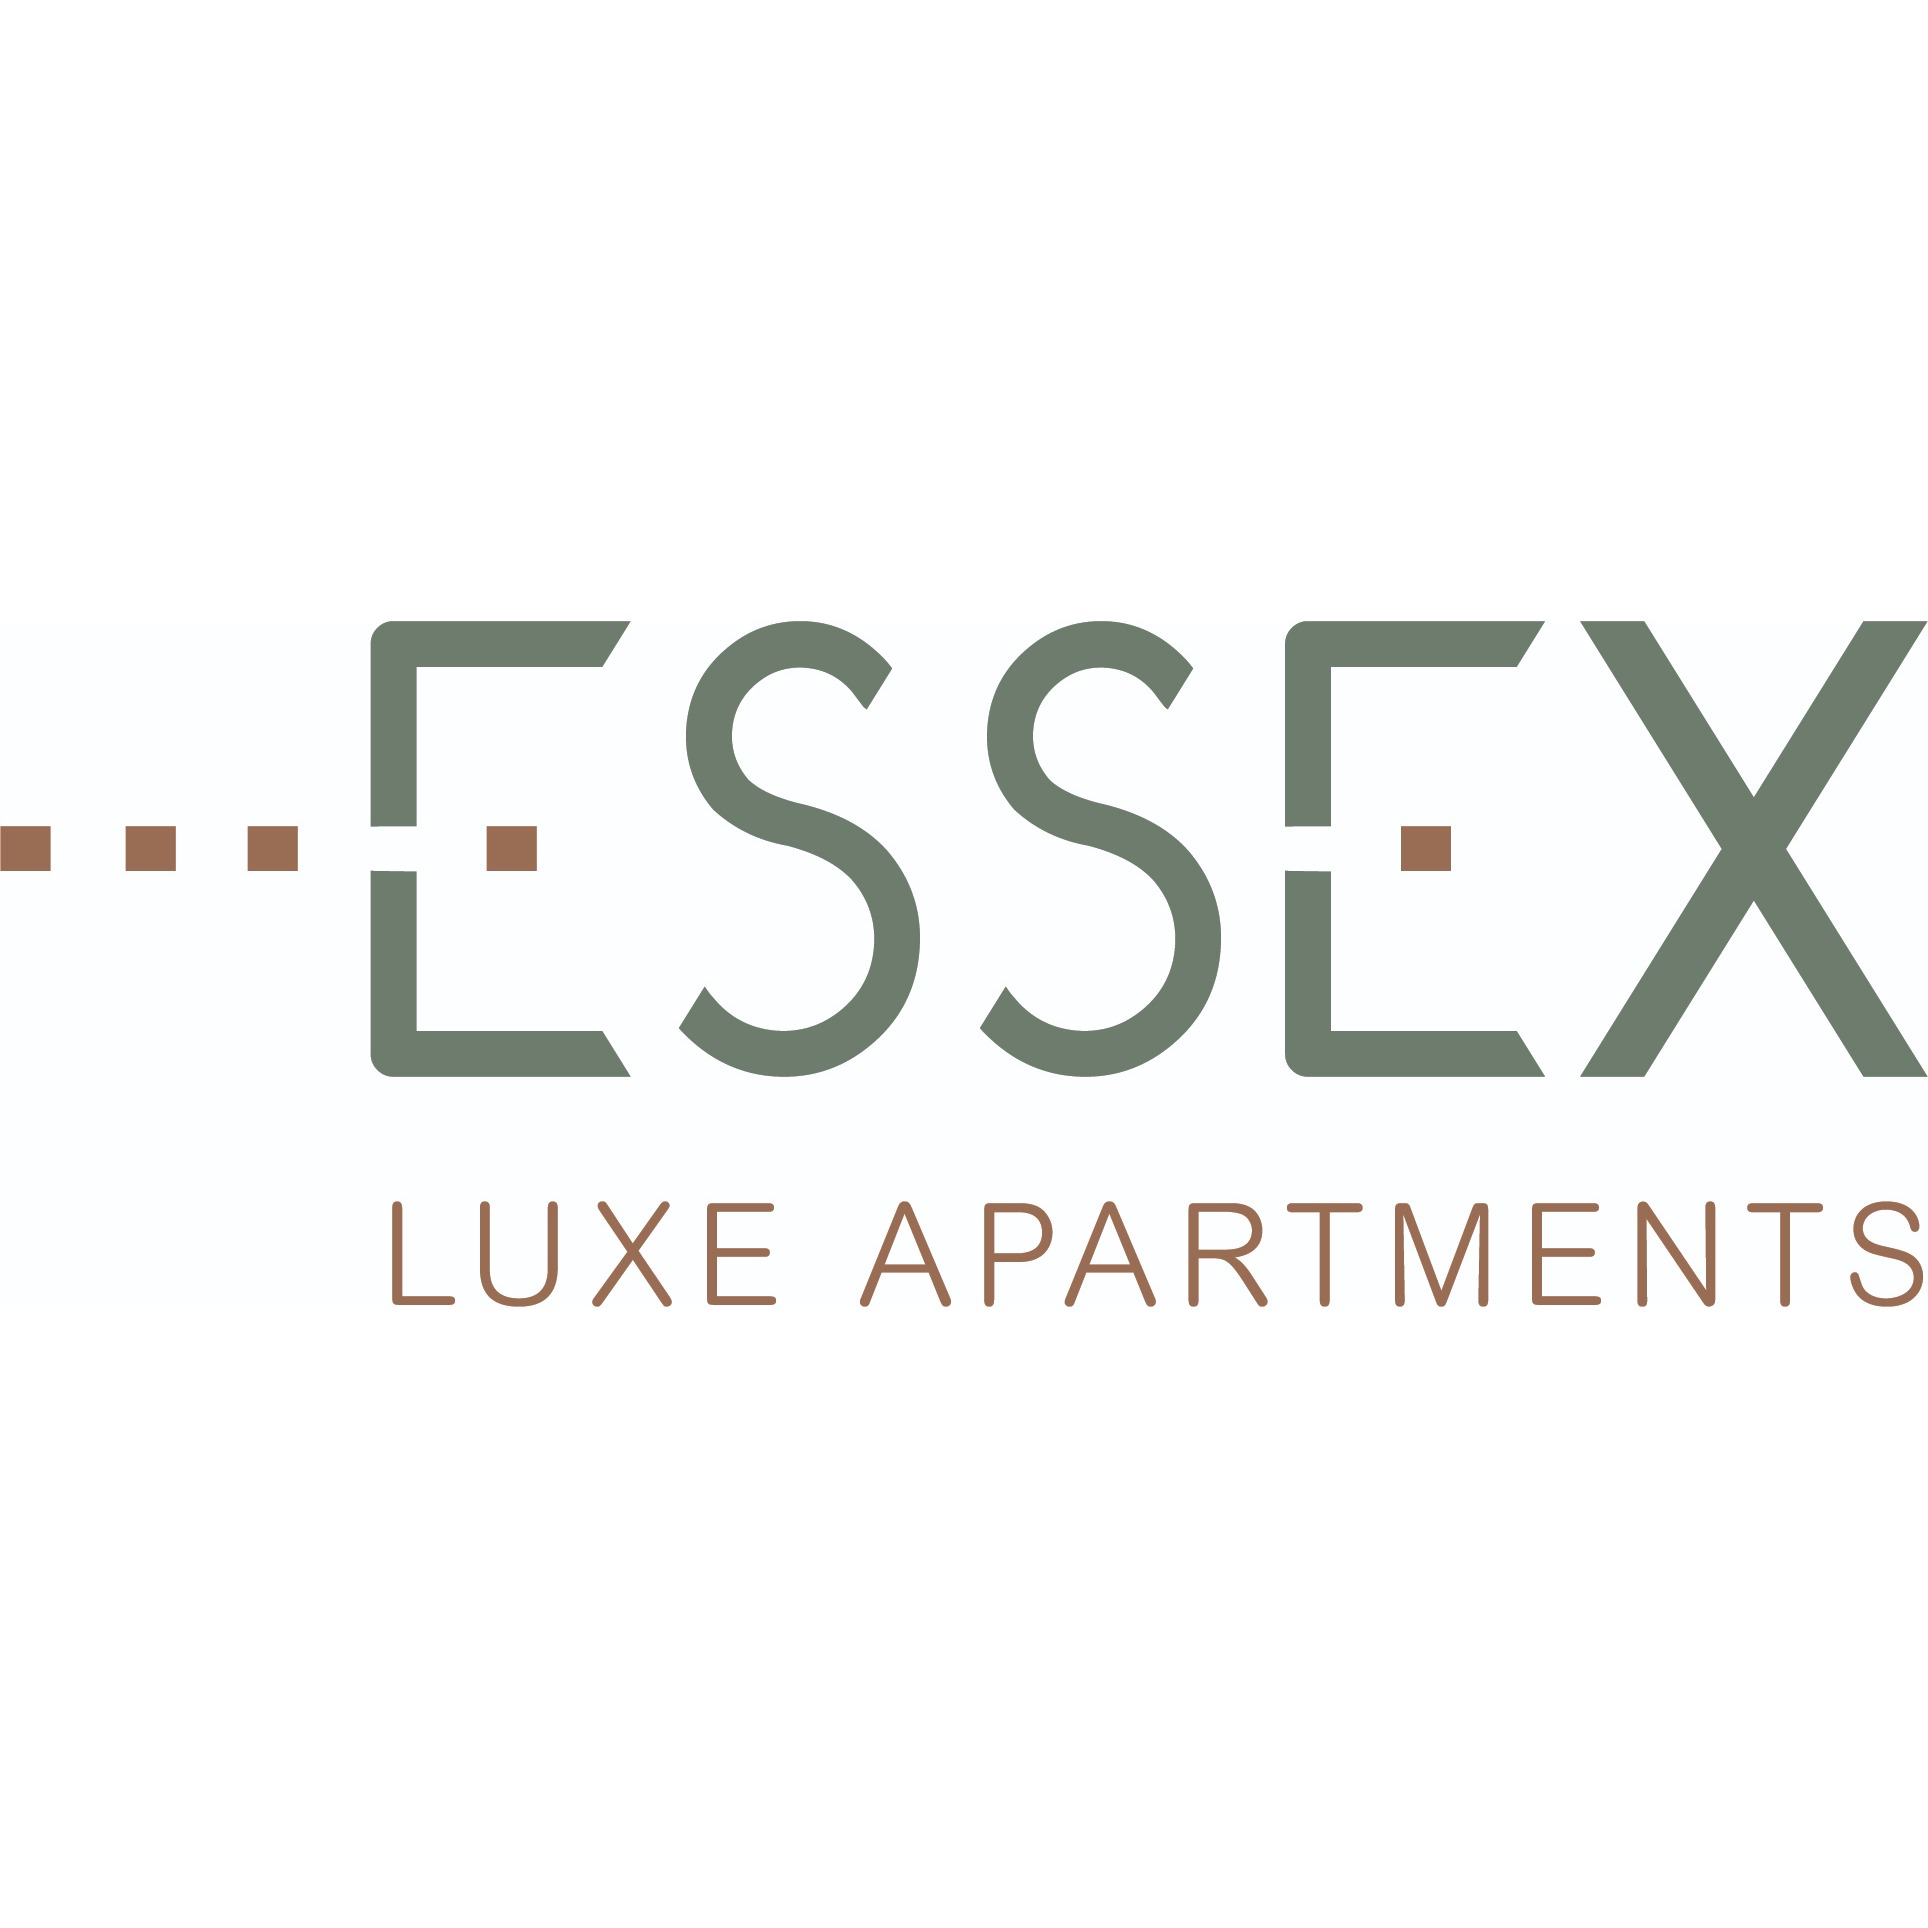 Essex Luxe Apartments Logo